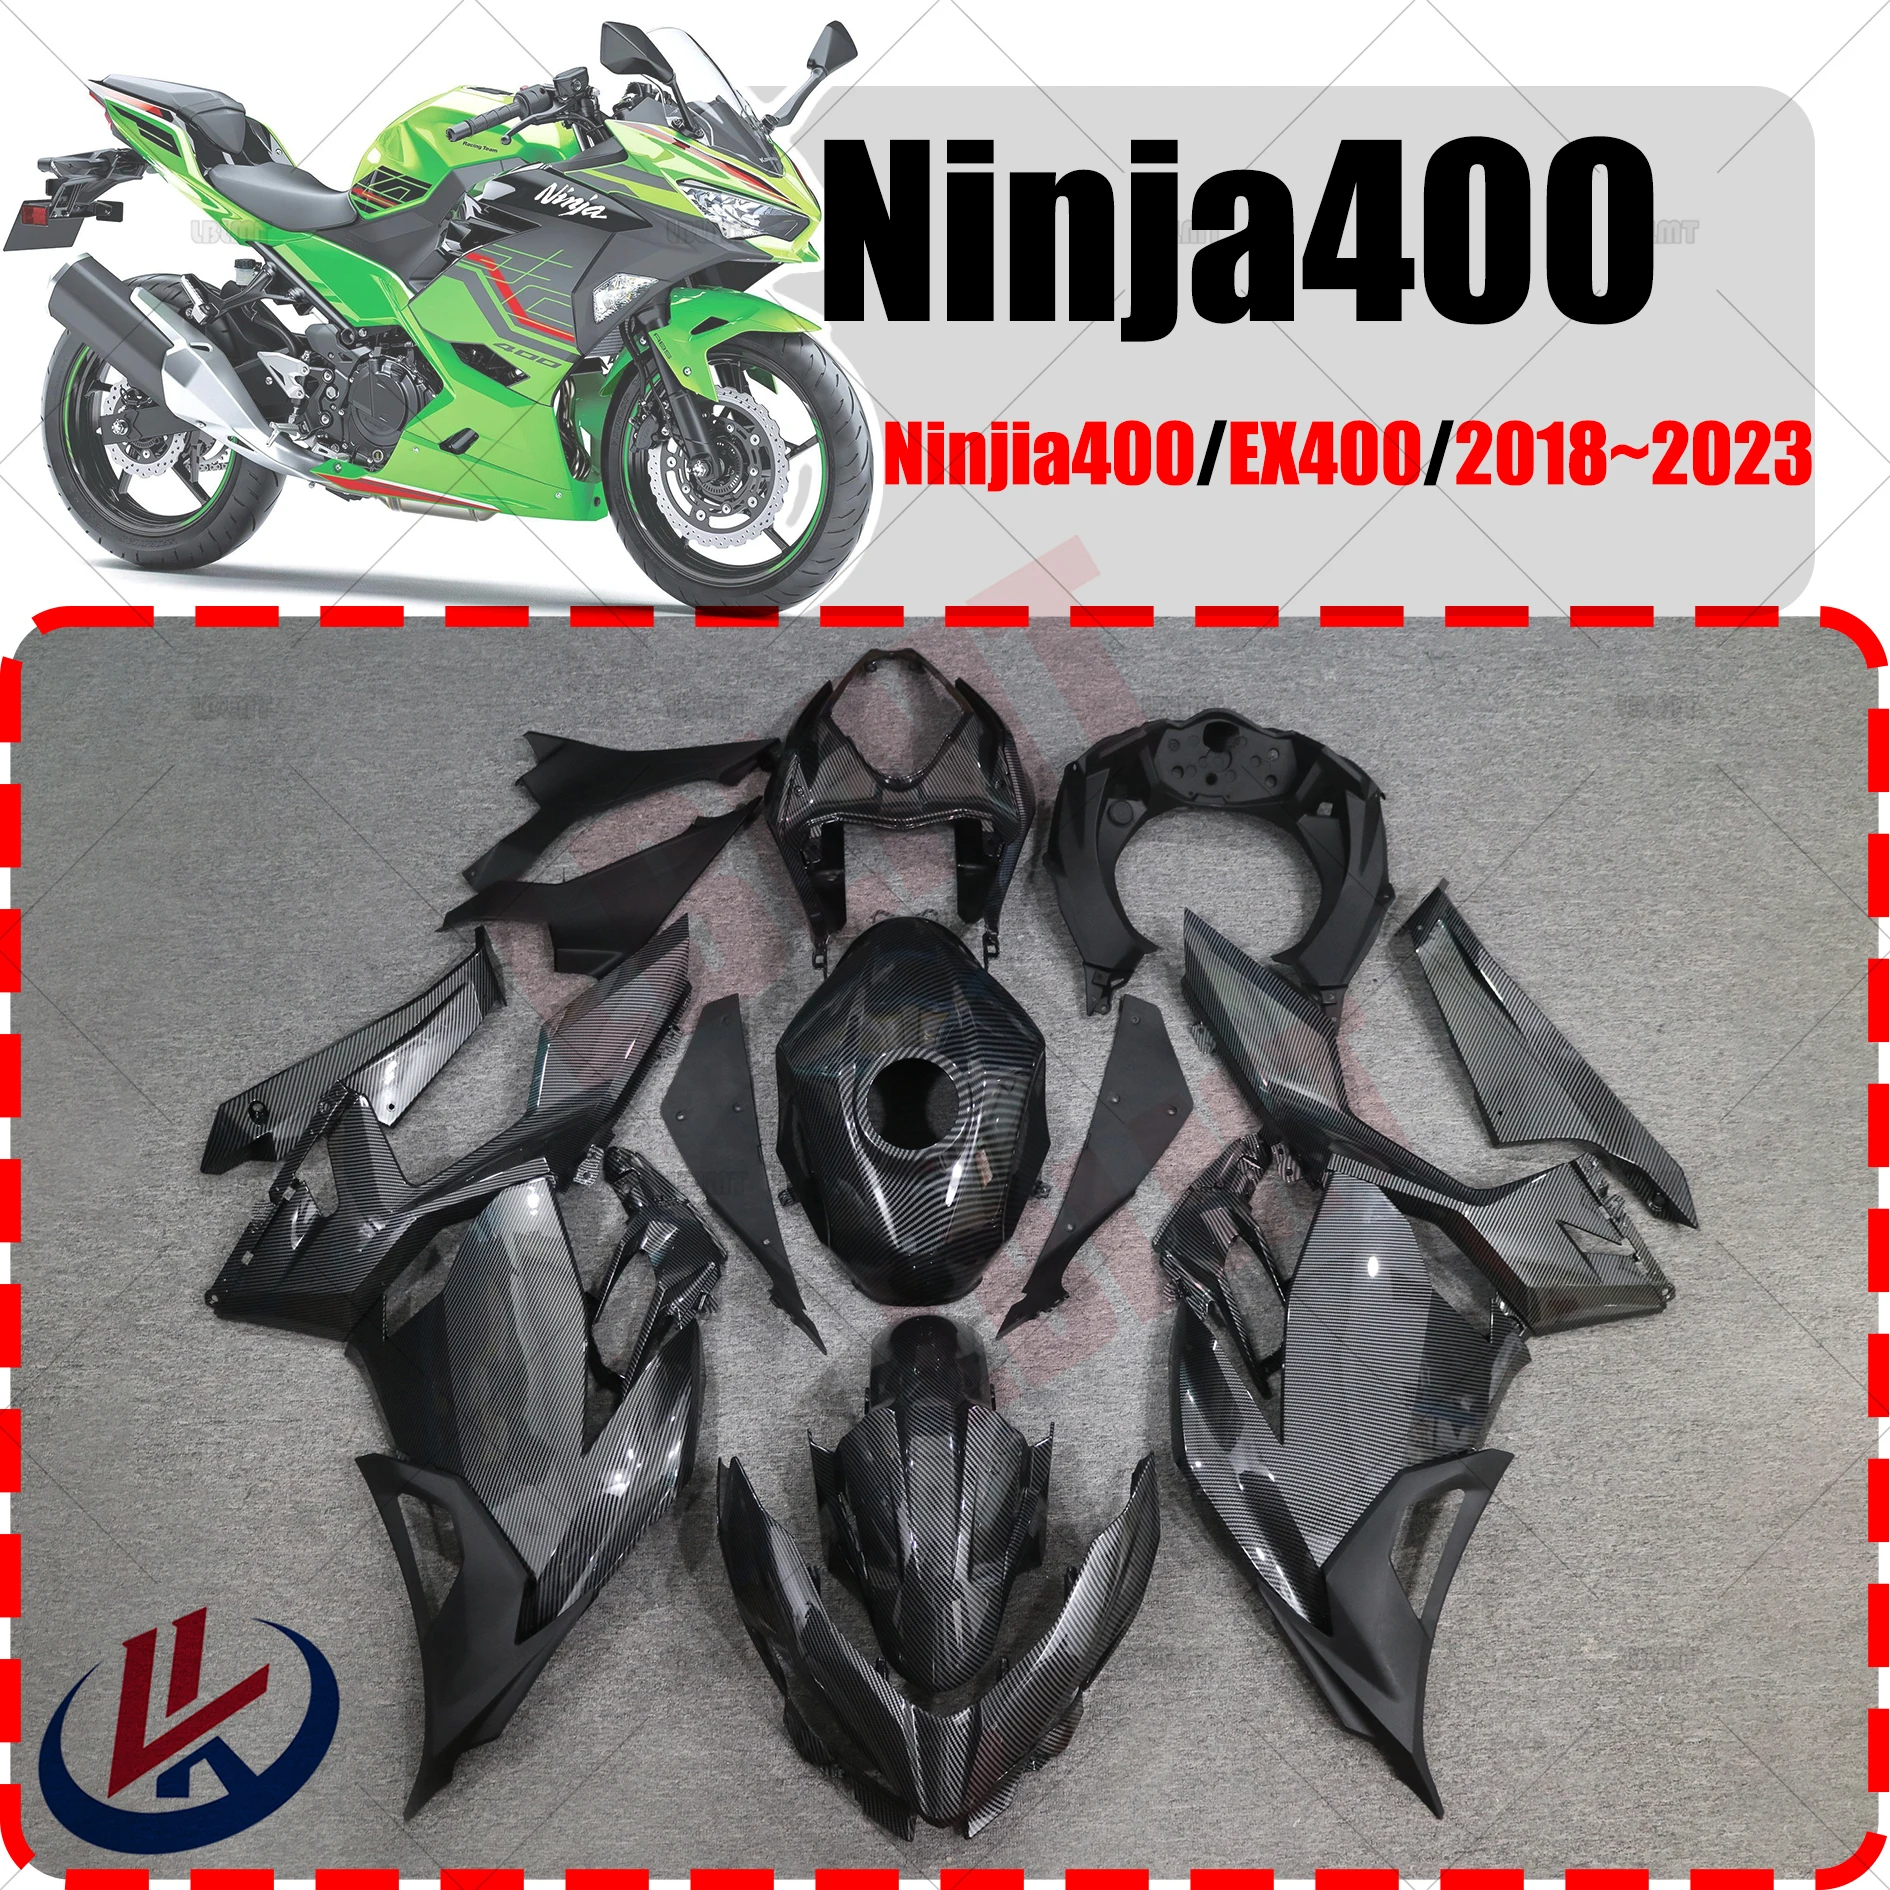 

For KAWASAKI Ninjia400 ninja400 EX400 2018 2019 2020 2021 2022 2023 Full Body Fit Fairing Kit ABS Injection molding Full Fairing